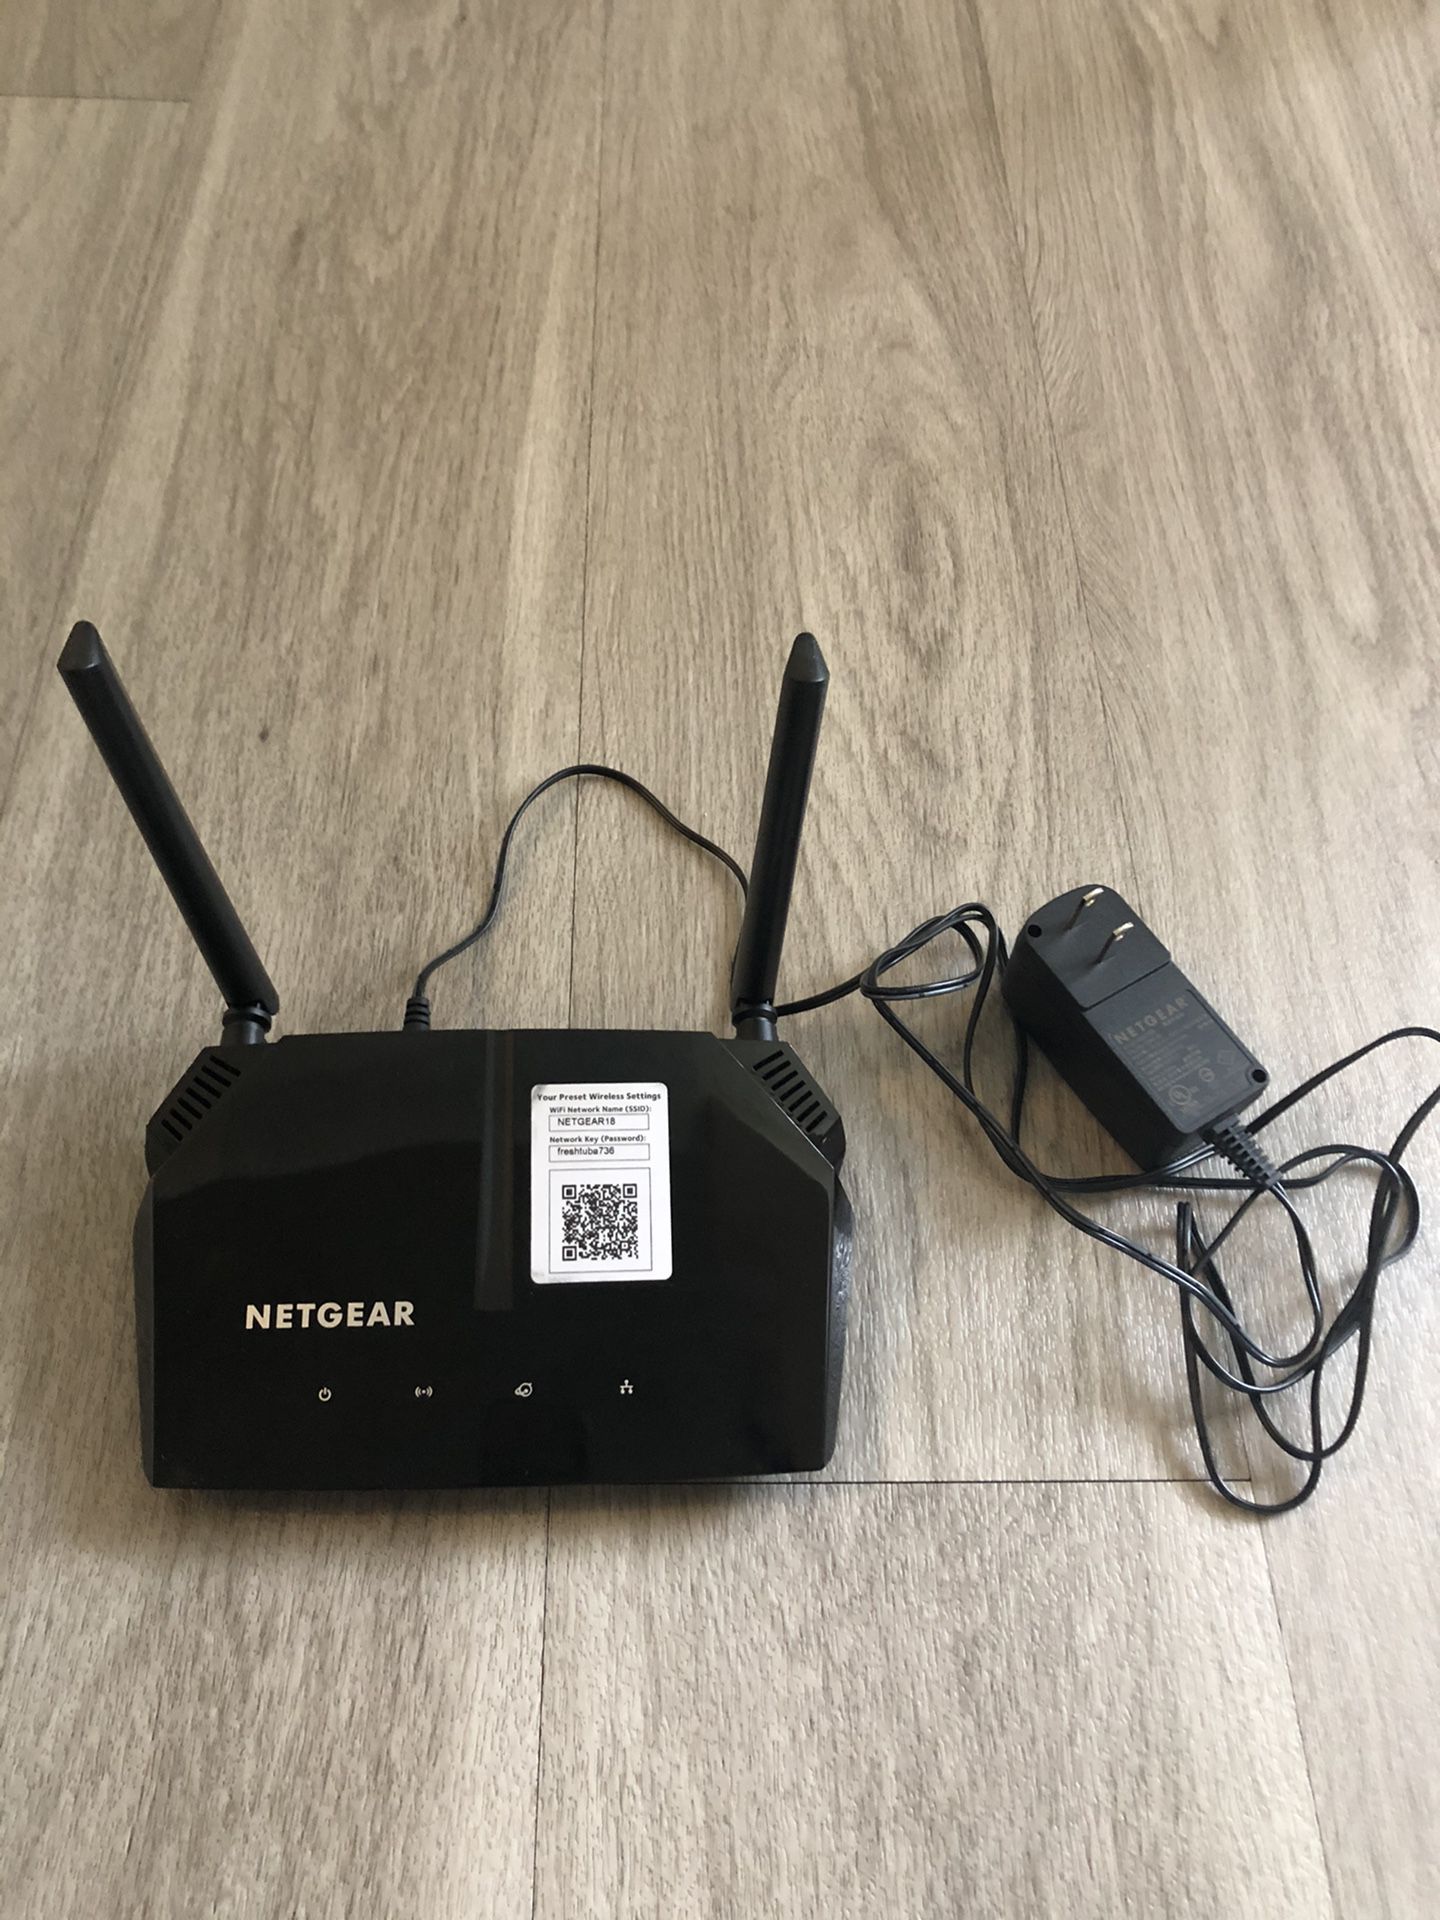 Netgear AC1000 WiFi Router